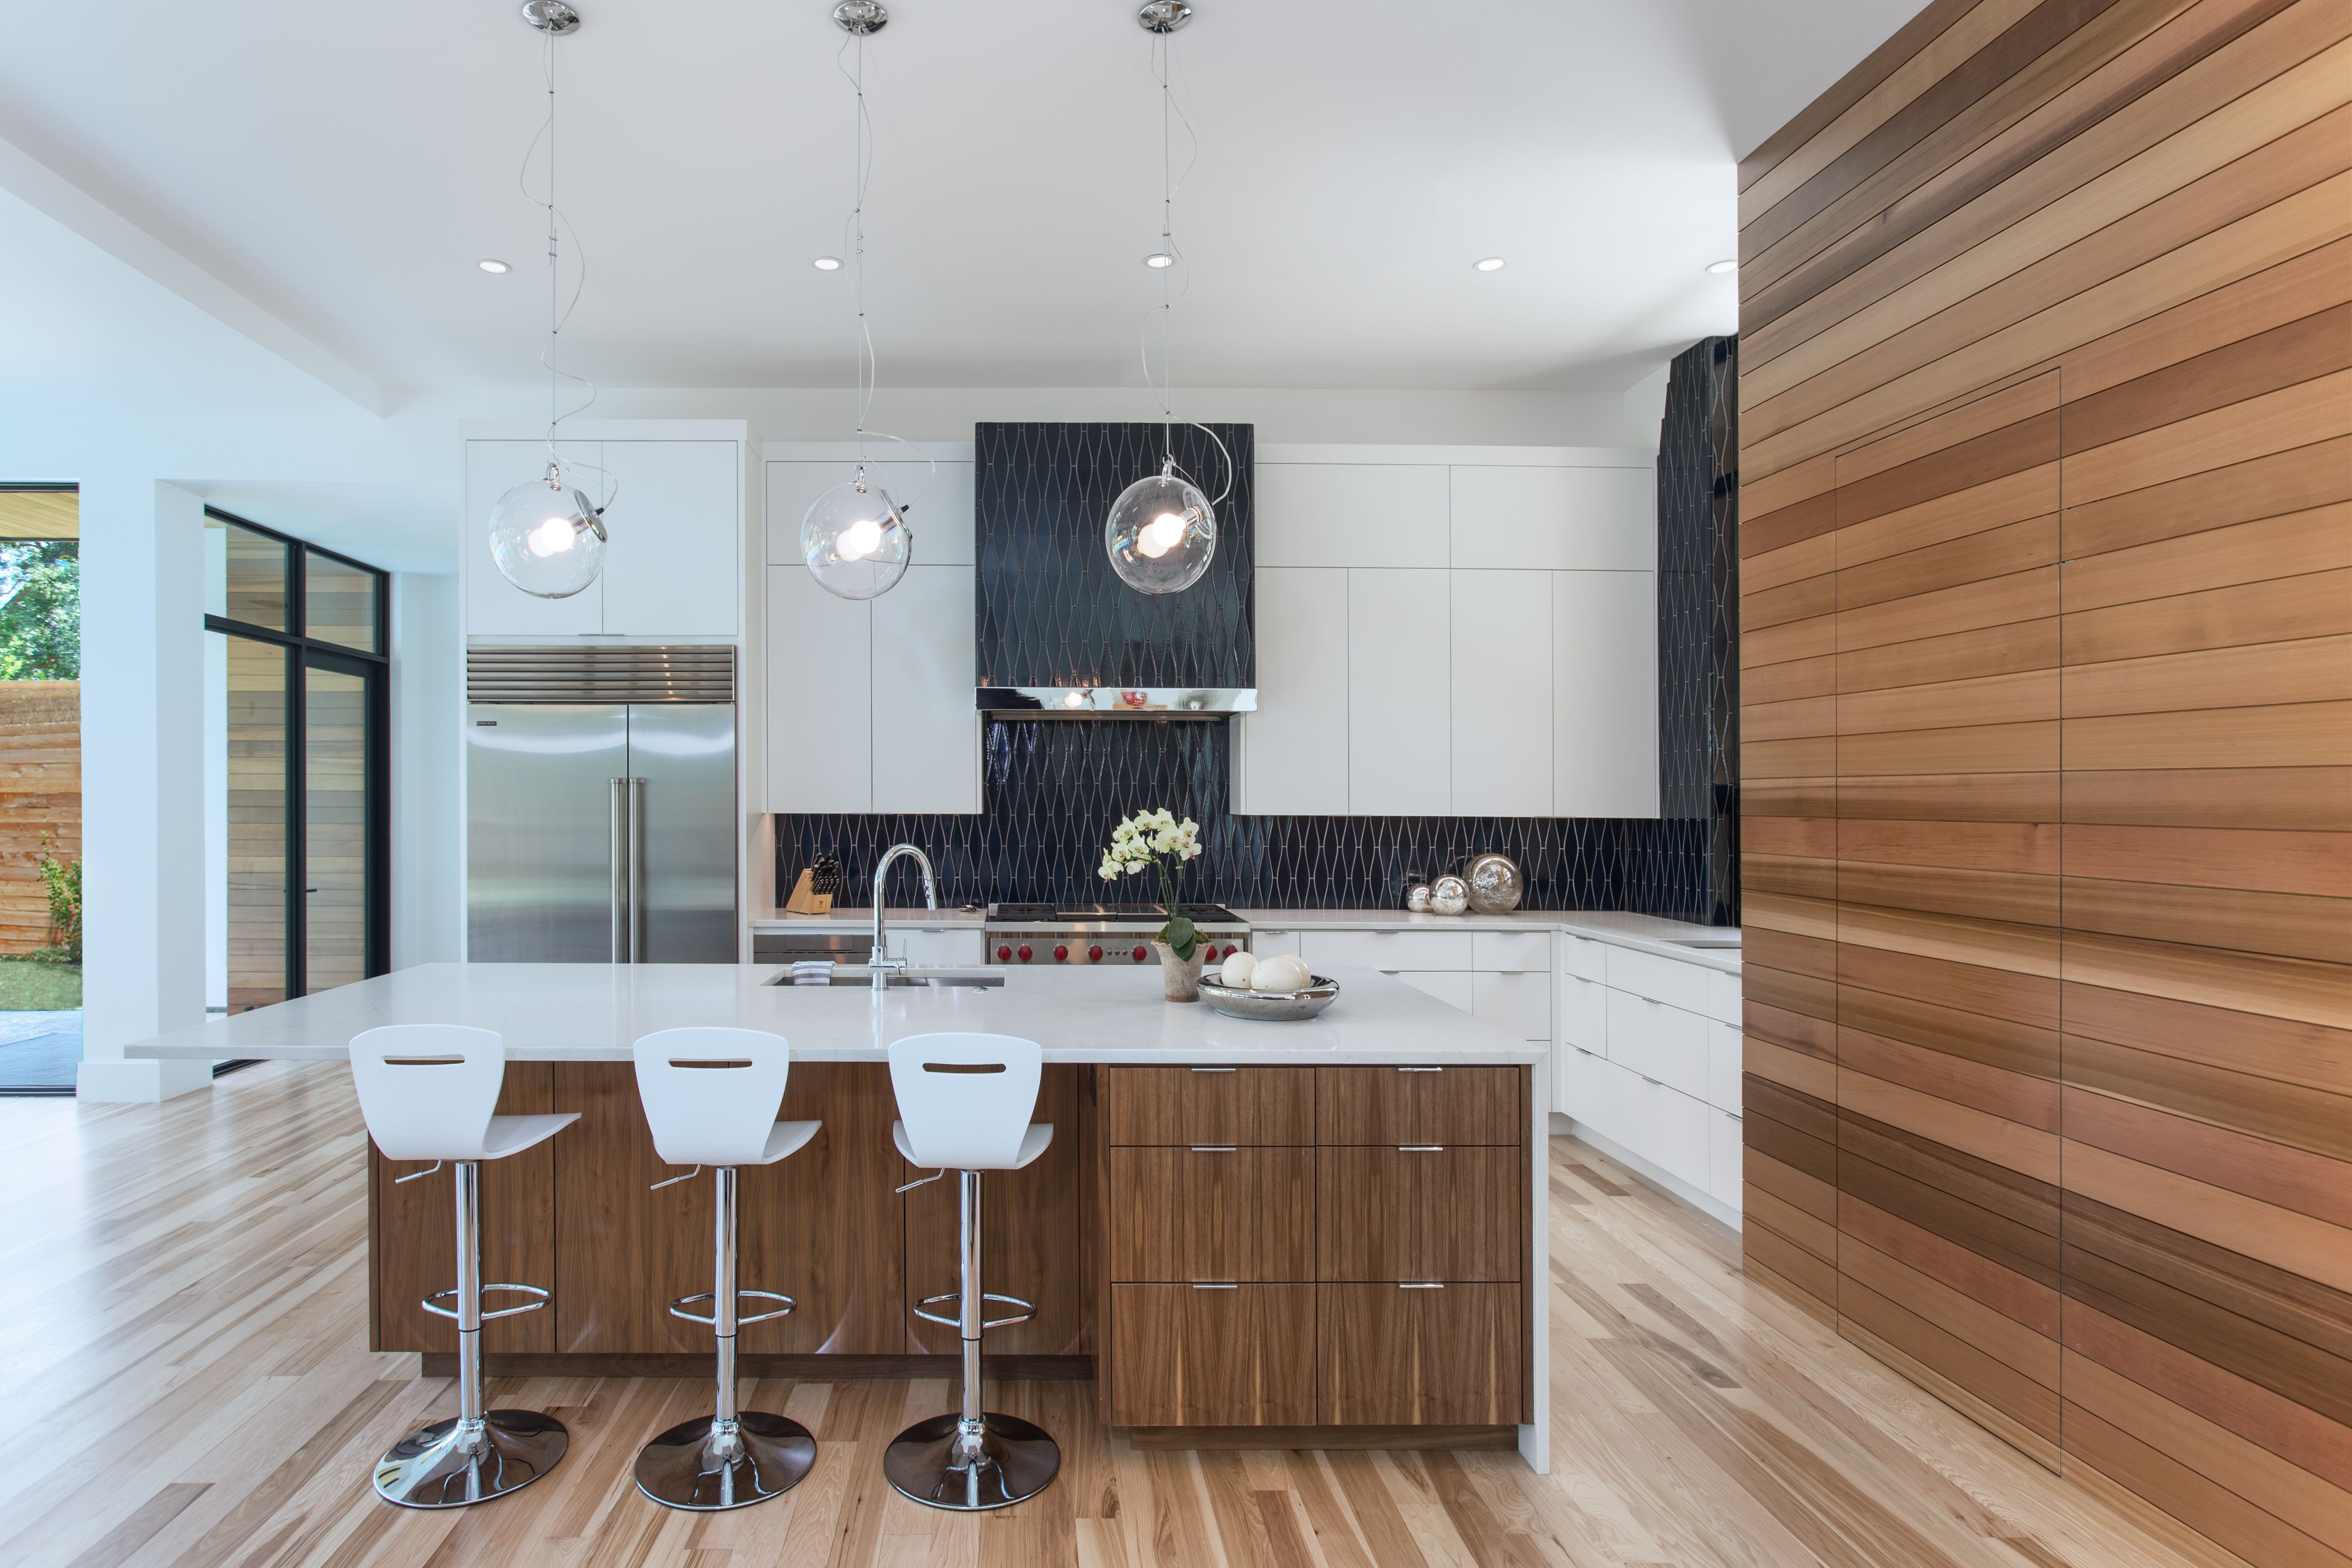 Kitchen Cornerstone Architects Inspiration For A